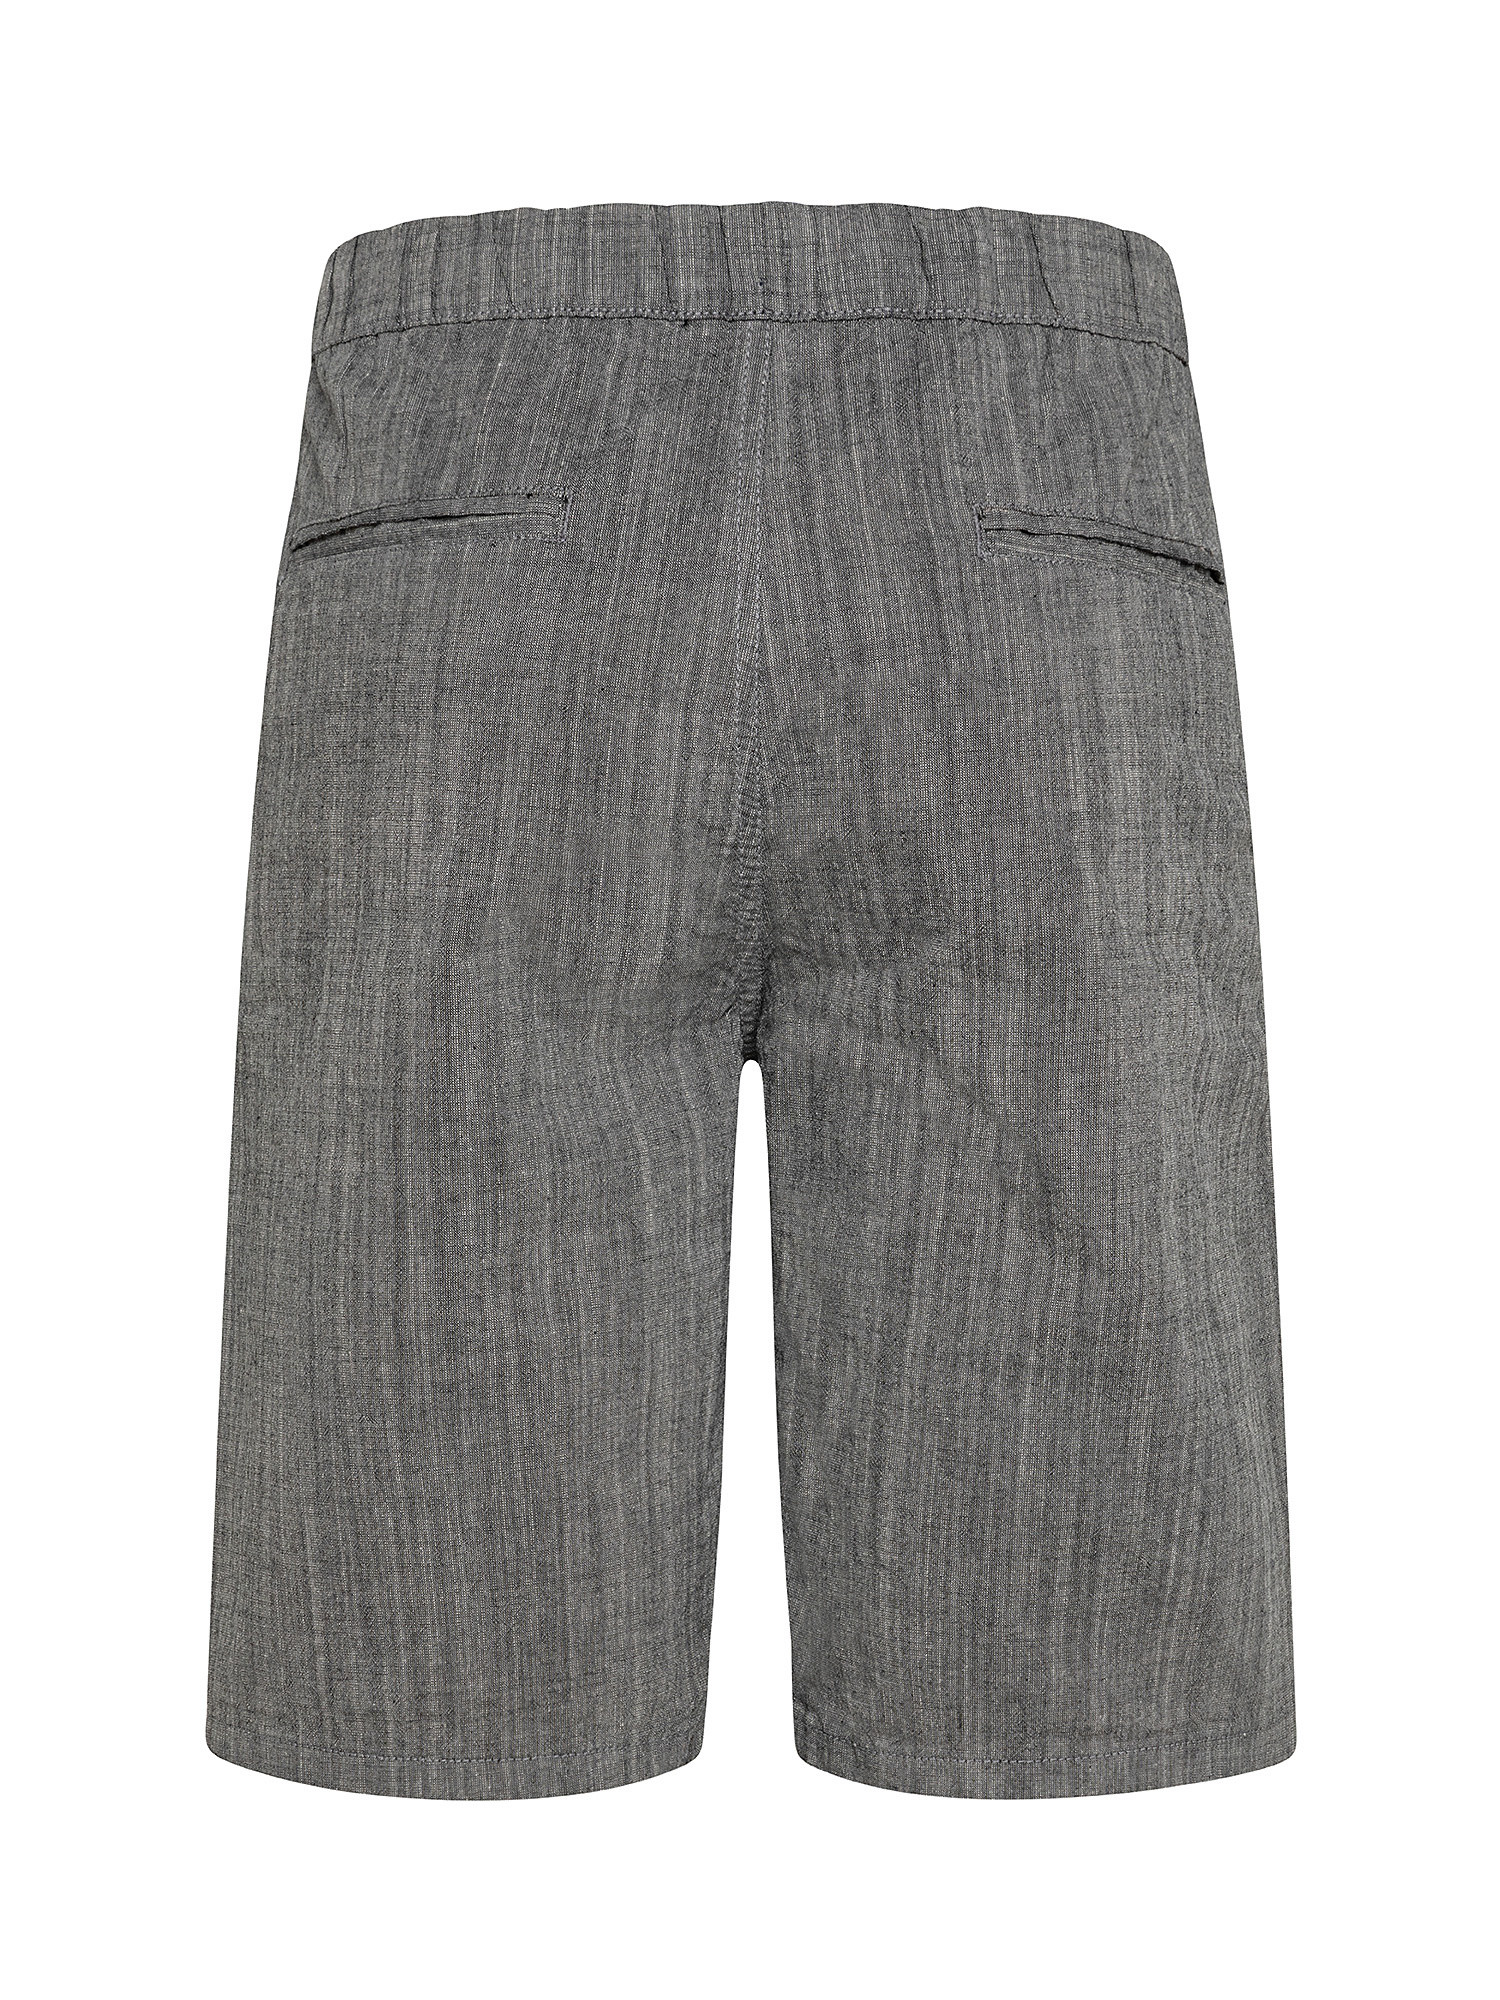 Bermuda shorts with drawstring at the waist, Grey, large image number 1